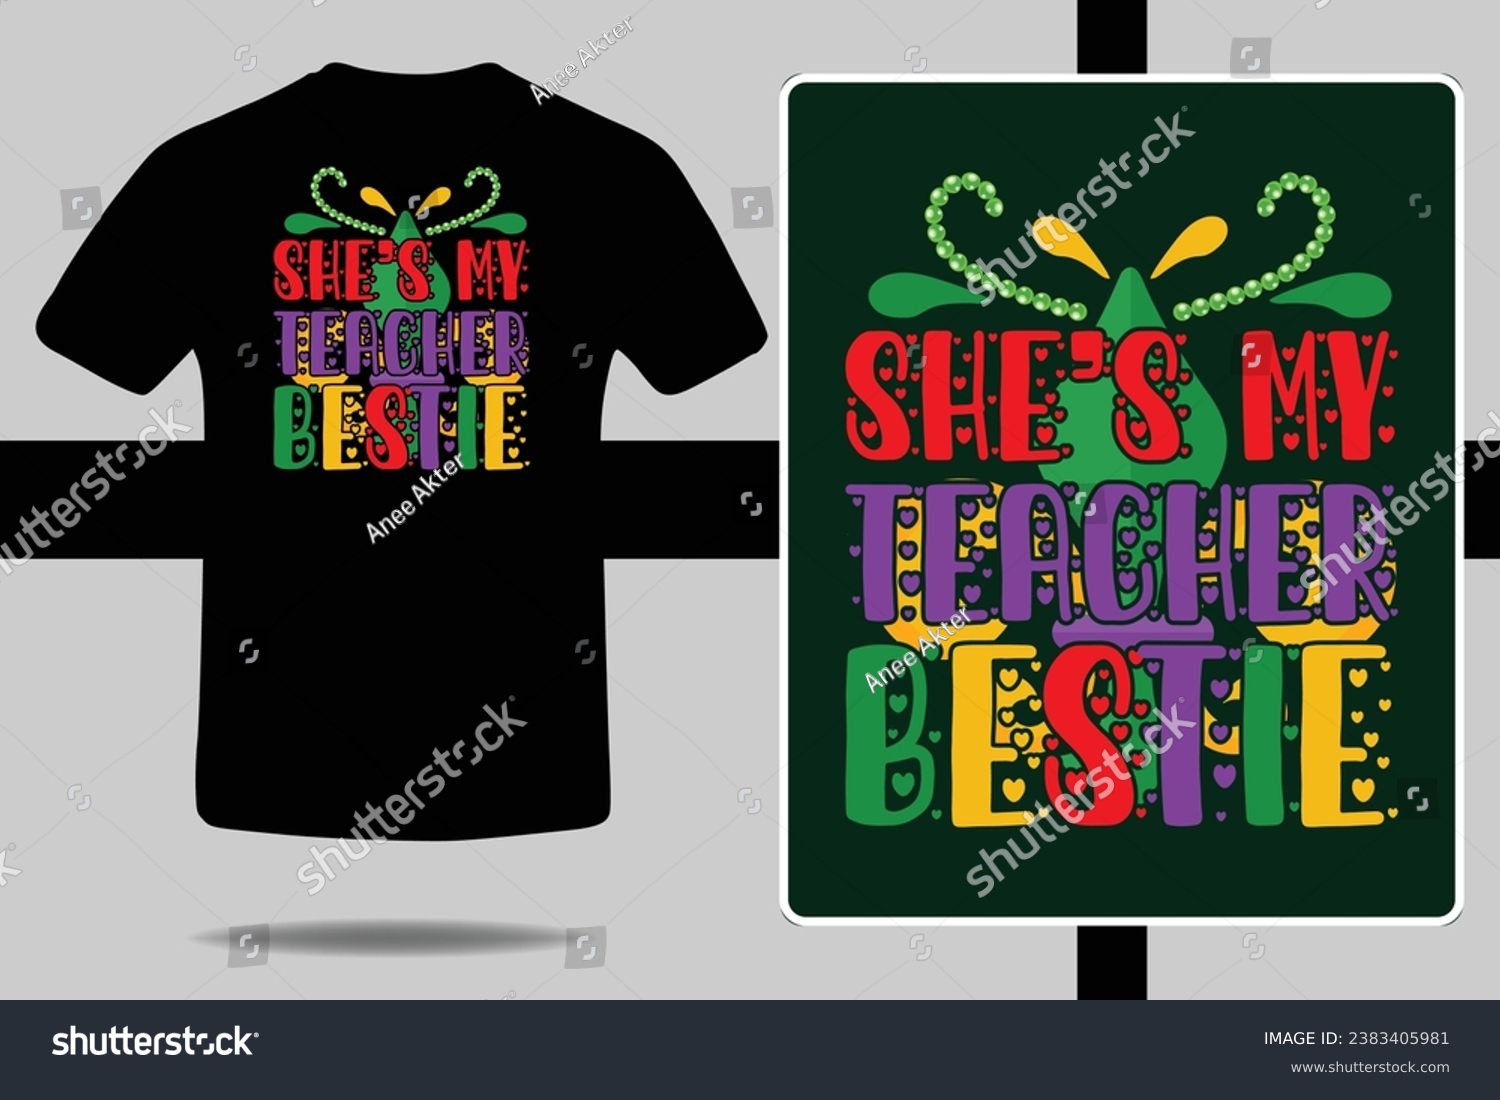 SVG of She Is My Teacher Bestie Shirt, Teacher Matching Shirt print template,Typography design for Carnival celebration, Teacher Crew Shirt, Teacher Gift, Bestie Gift, Christian feasts, Epiphany, culminating svg